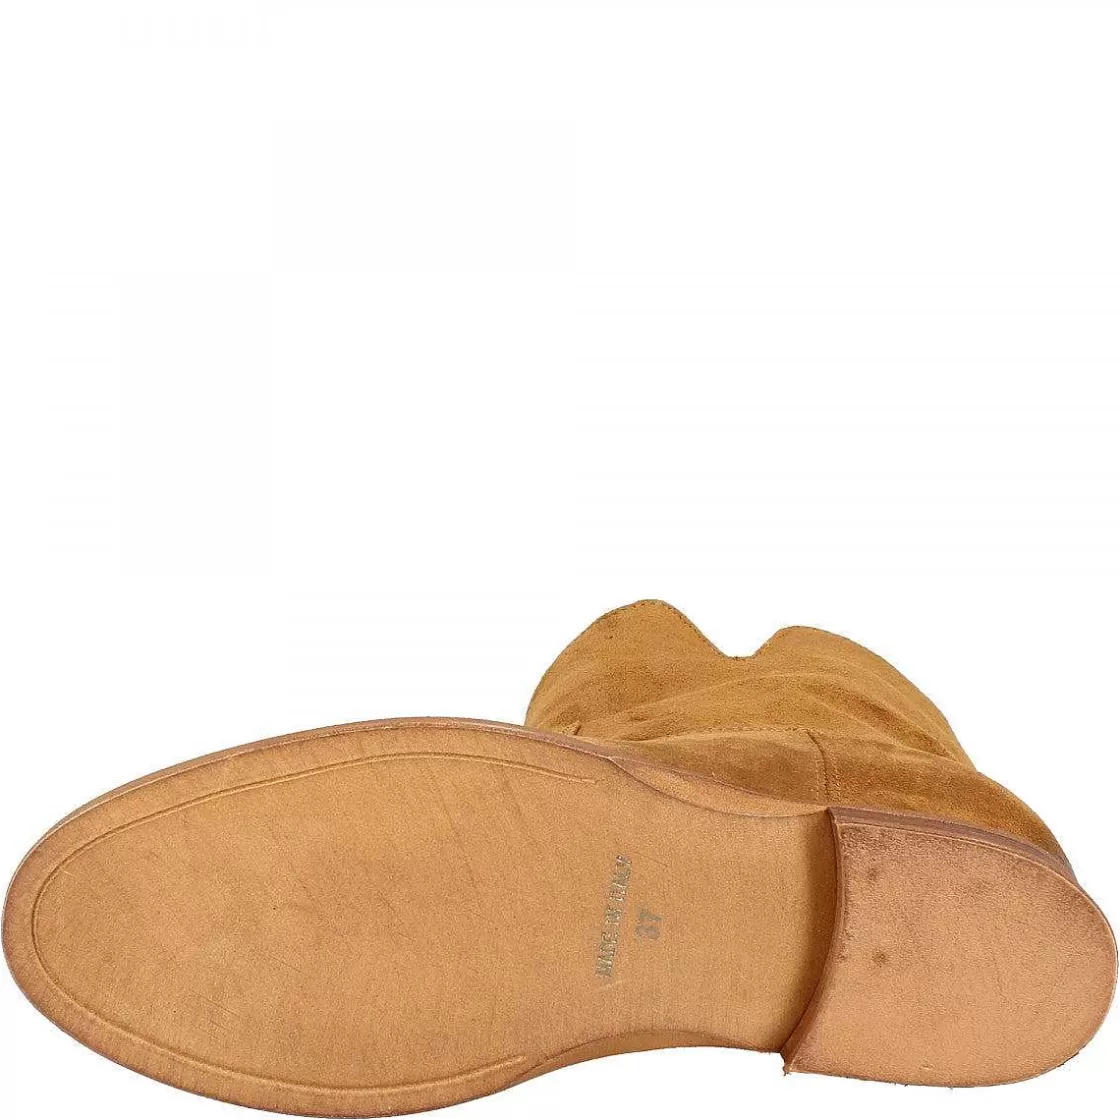 Leonardo Women'S Ankle Boots With Internal Platform Handmade In Tan Suede Leather Best